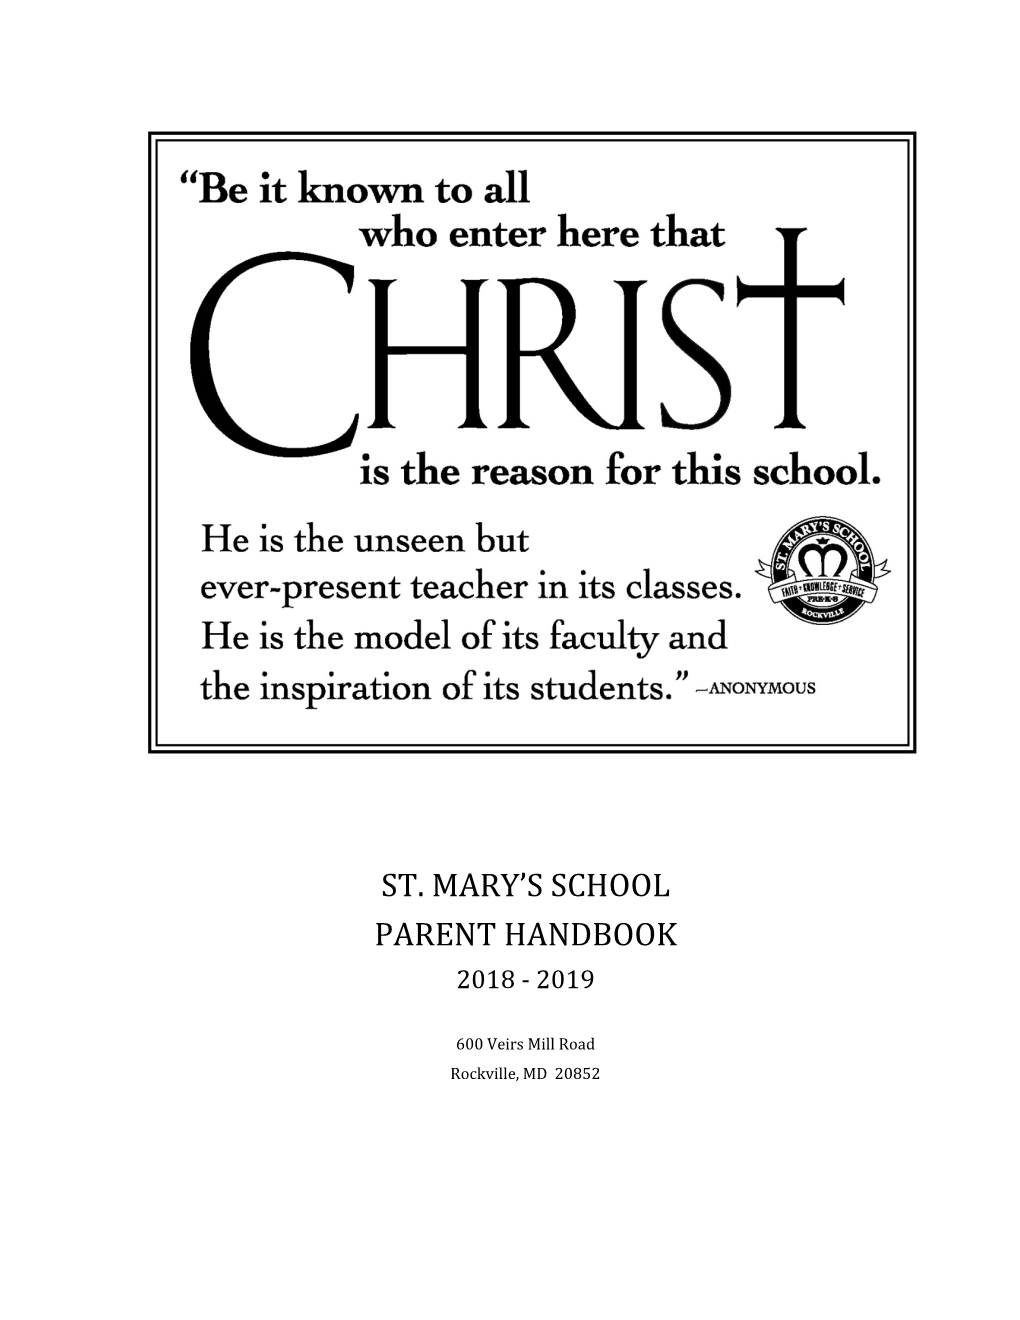 St. Mary's School Parent Handbook